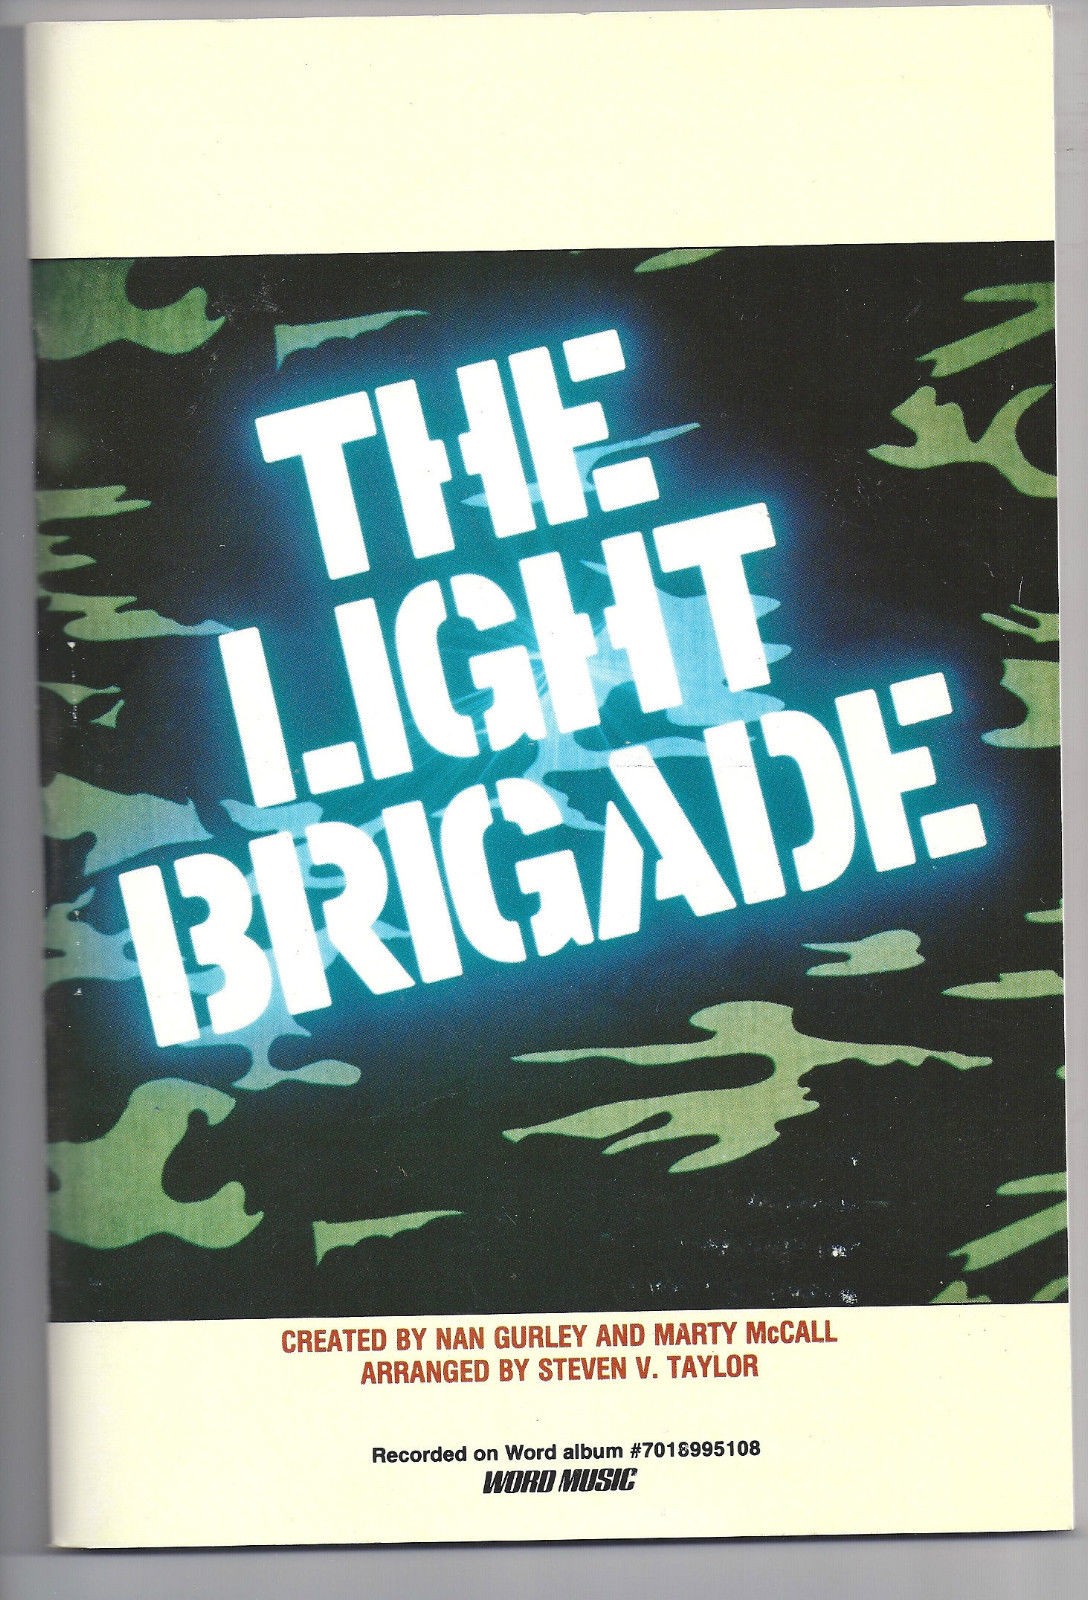 Light Brigade choral music book